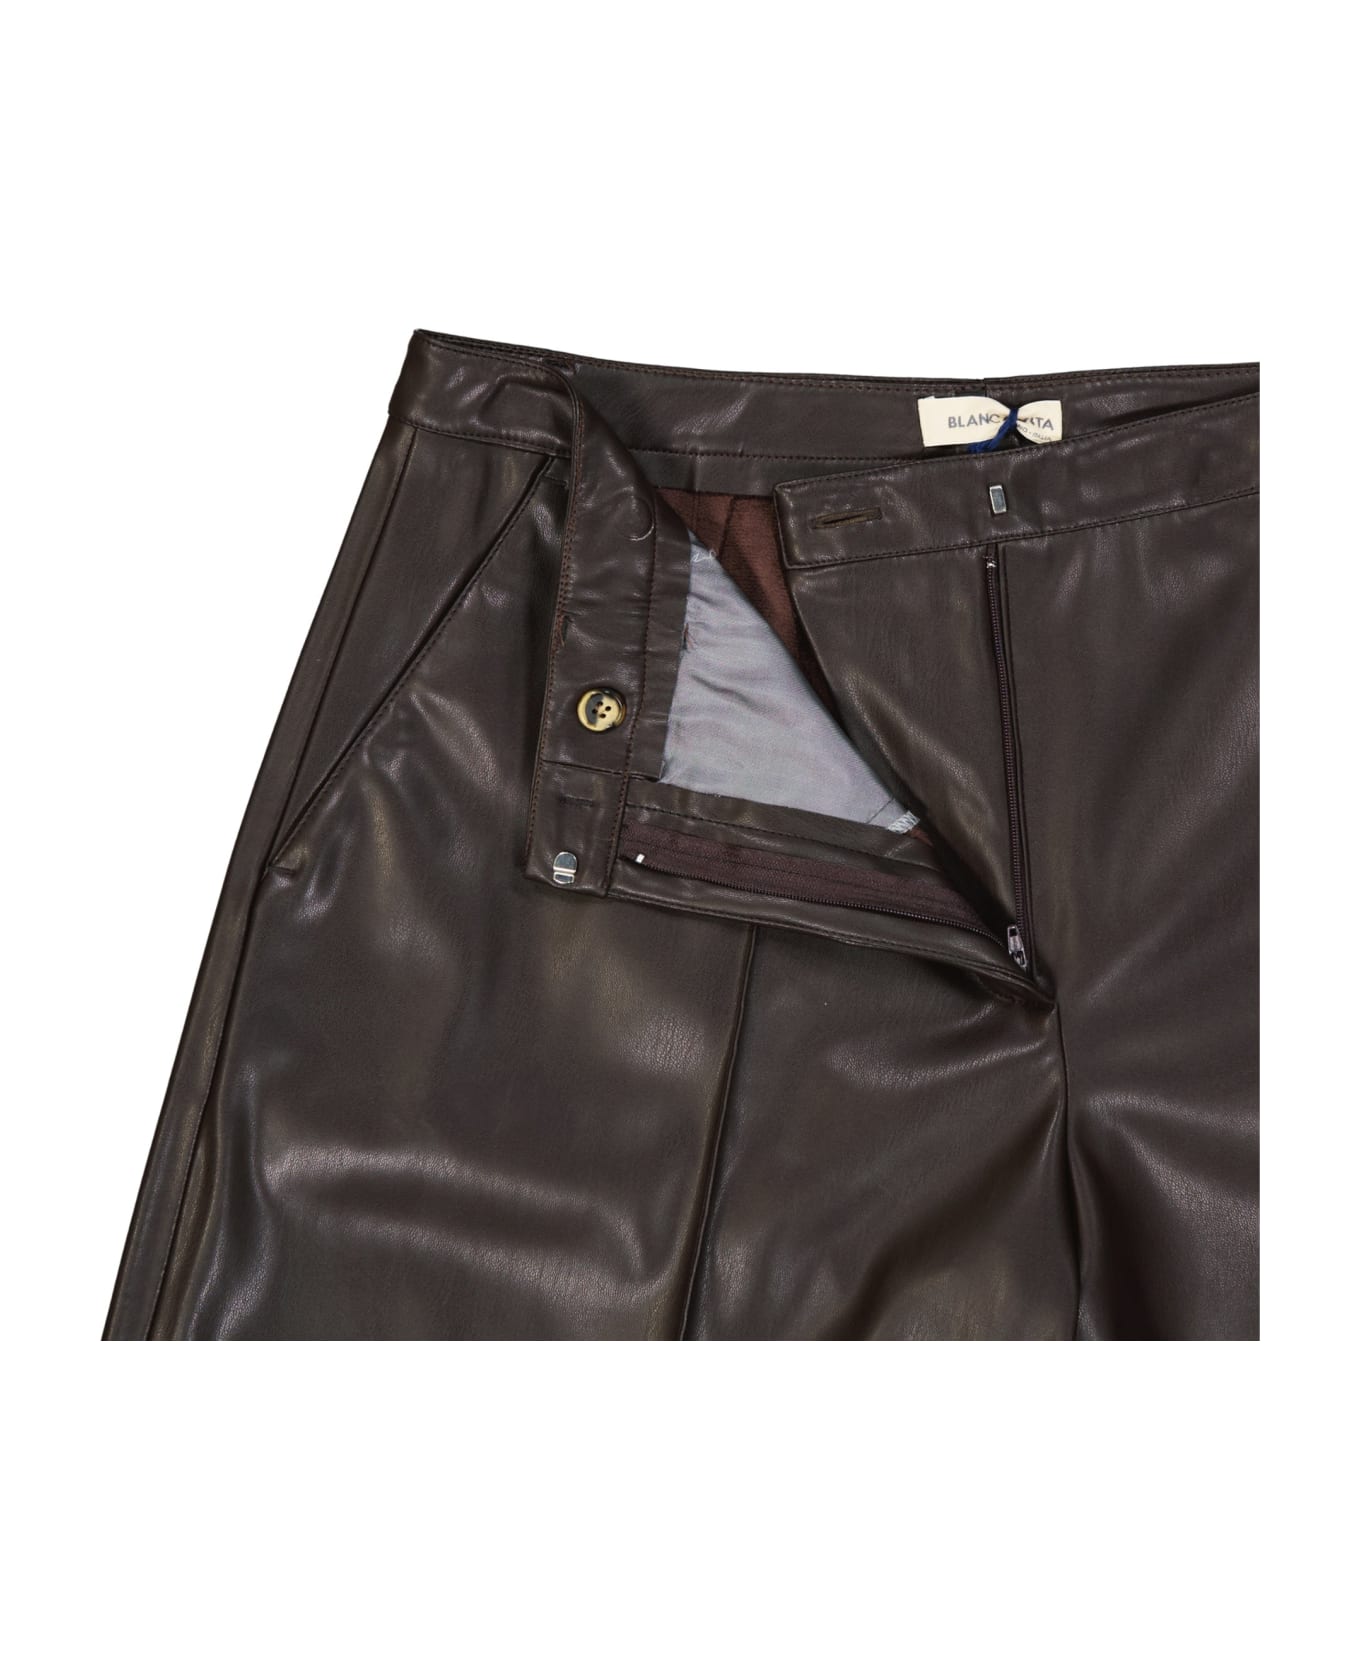 Blanca Vita Faux Leather Shorts - Brown